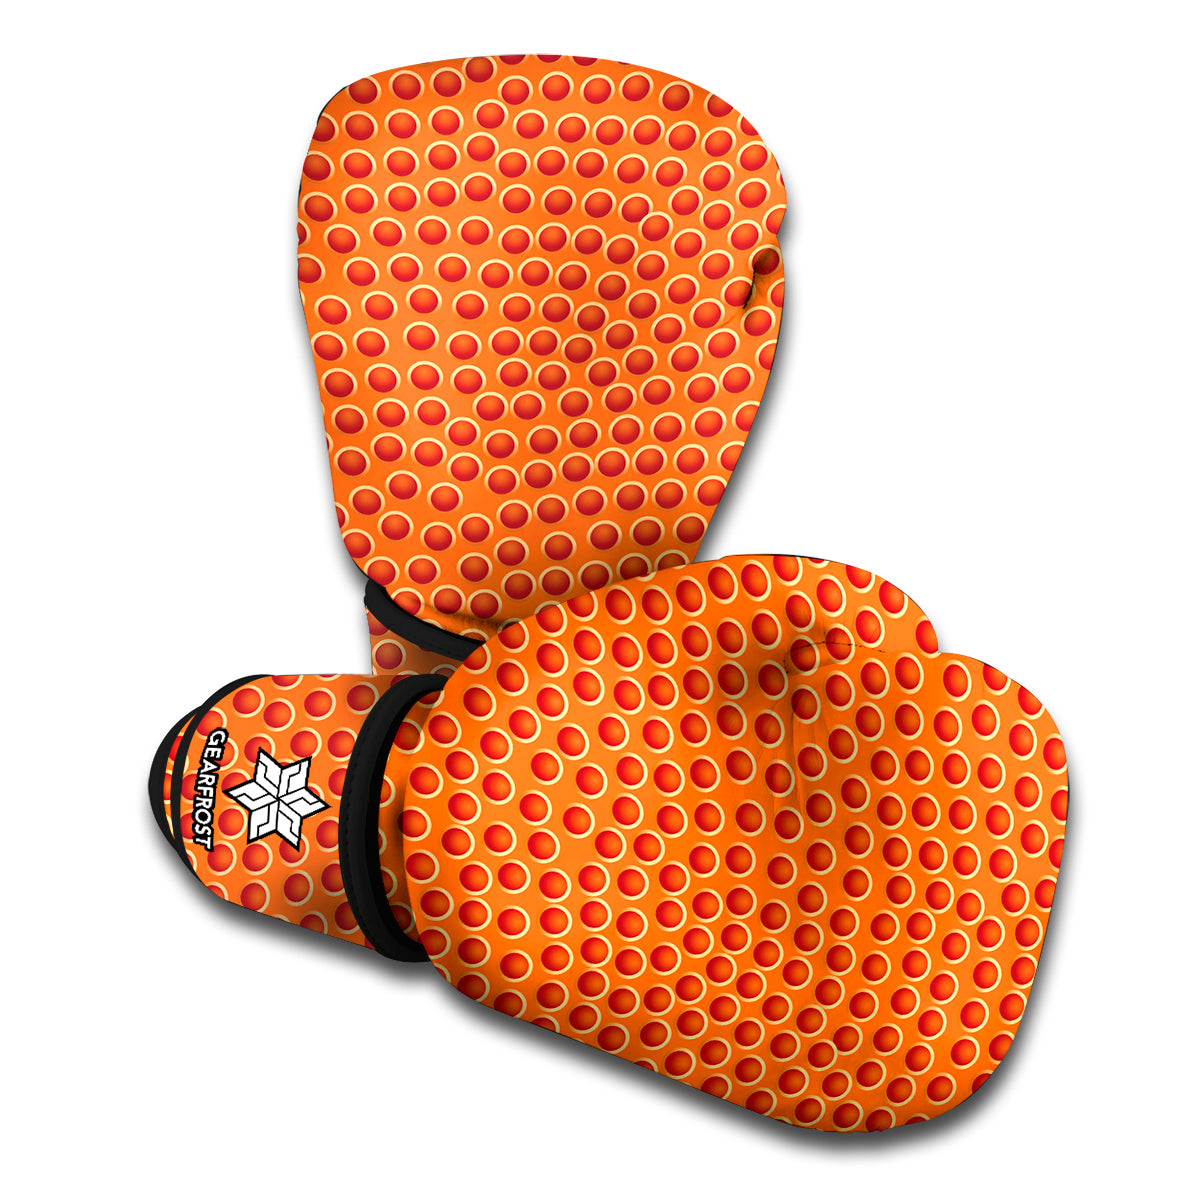 Basketball Bumps Texture Print Boxing Gloves